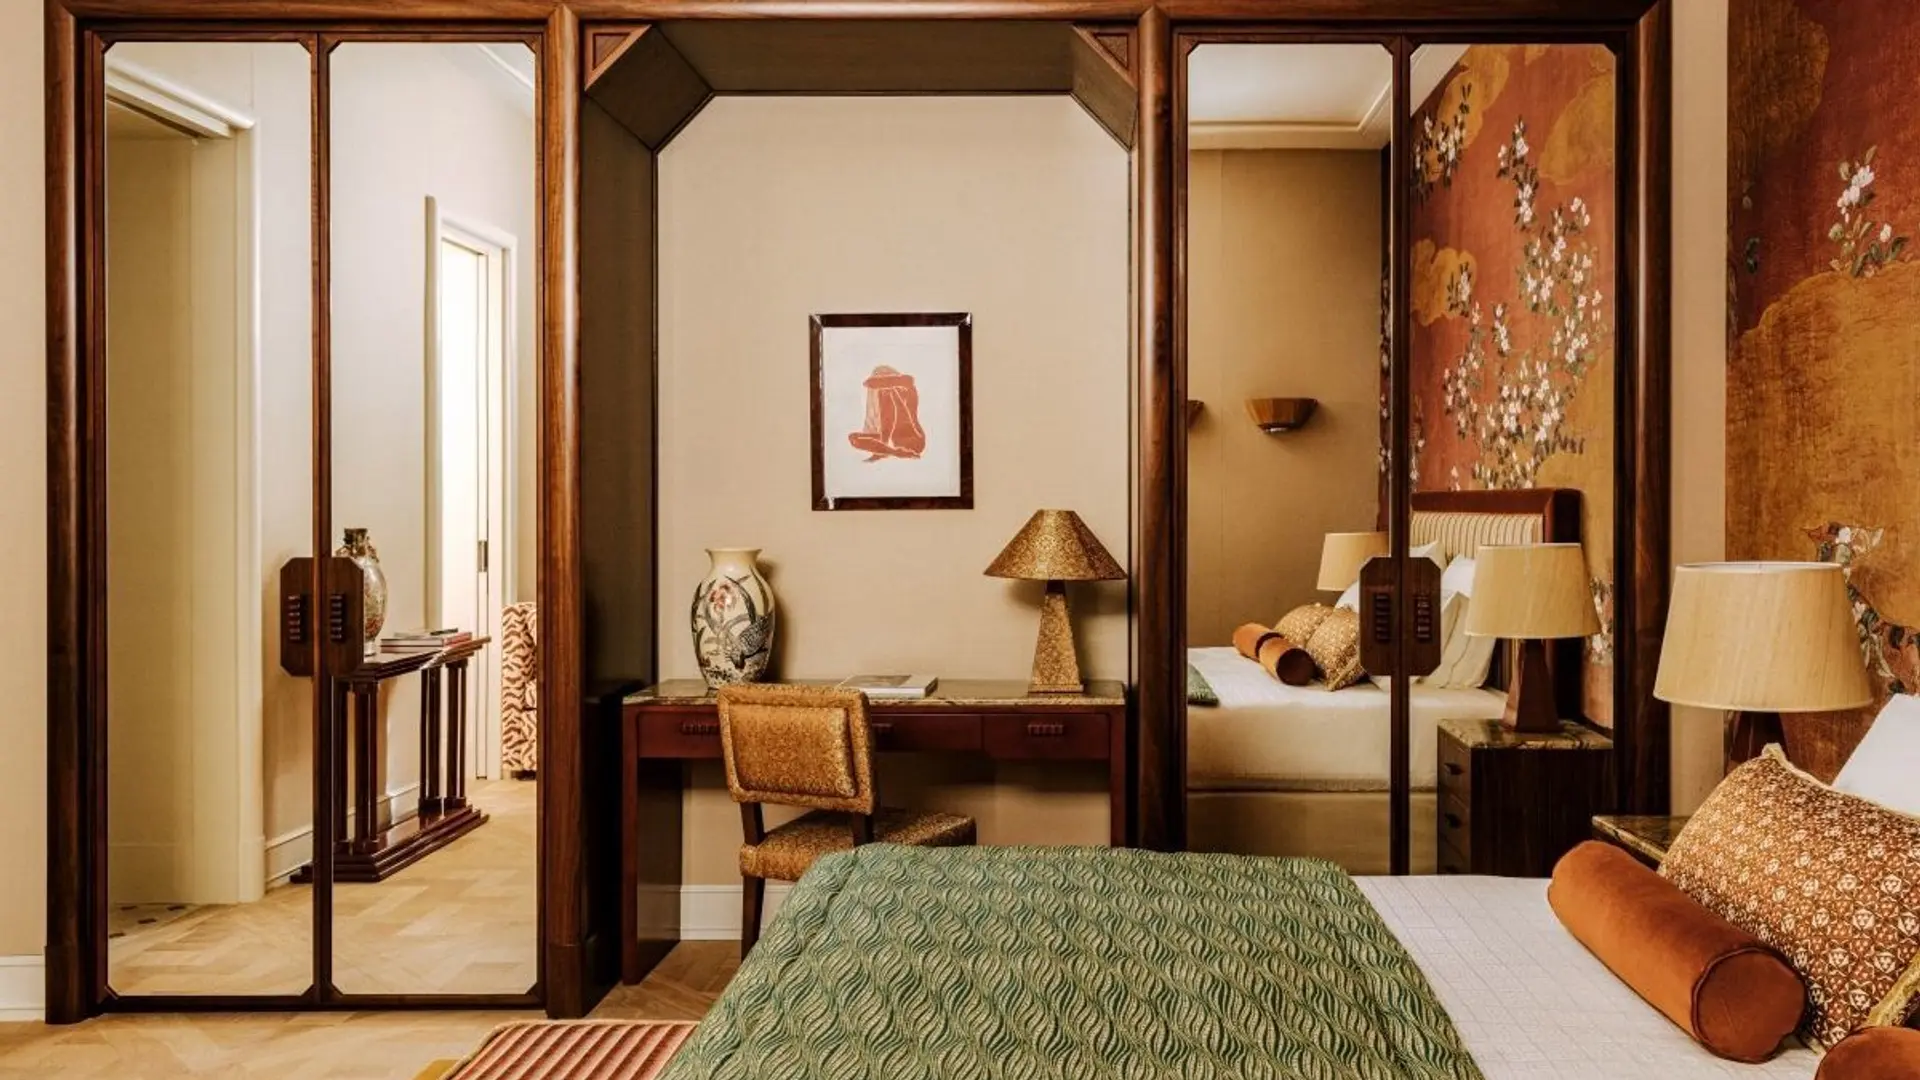 Bedroom at saint james hotel paris with a brown design look